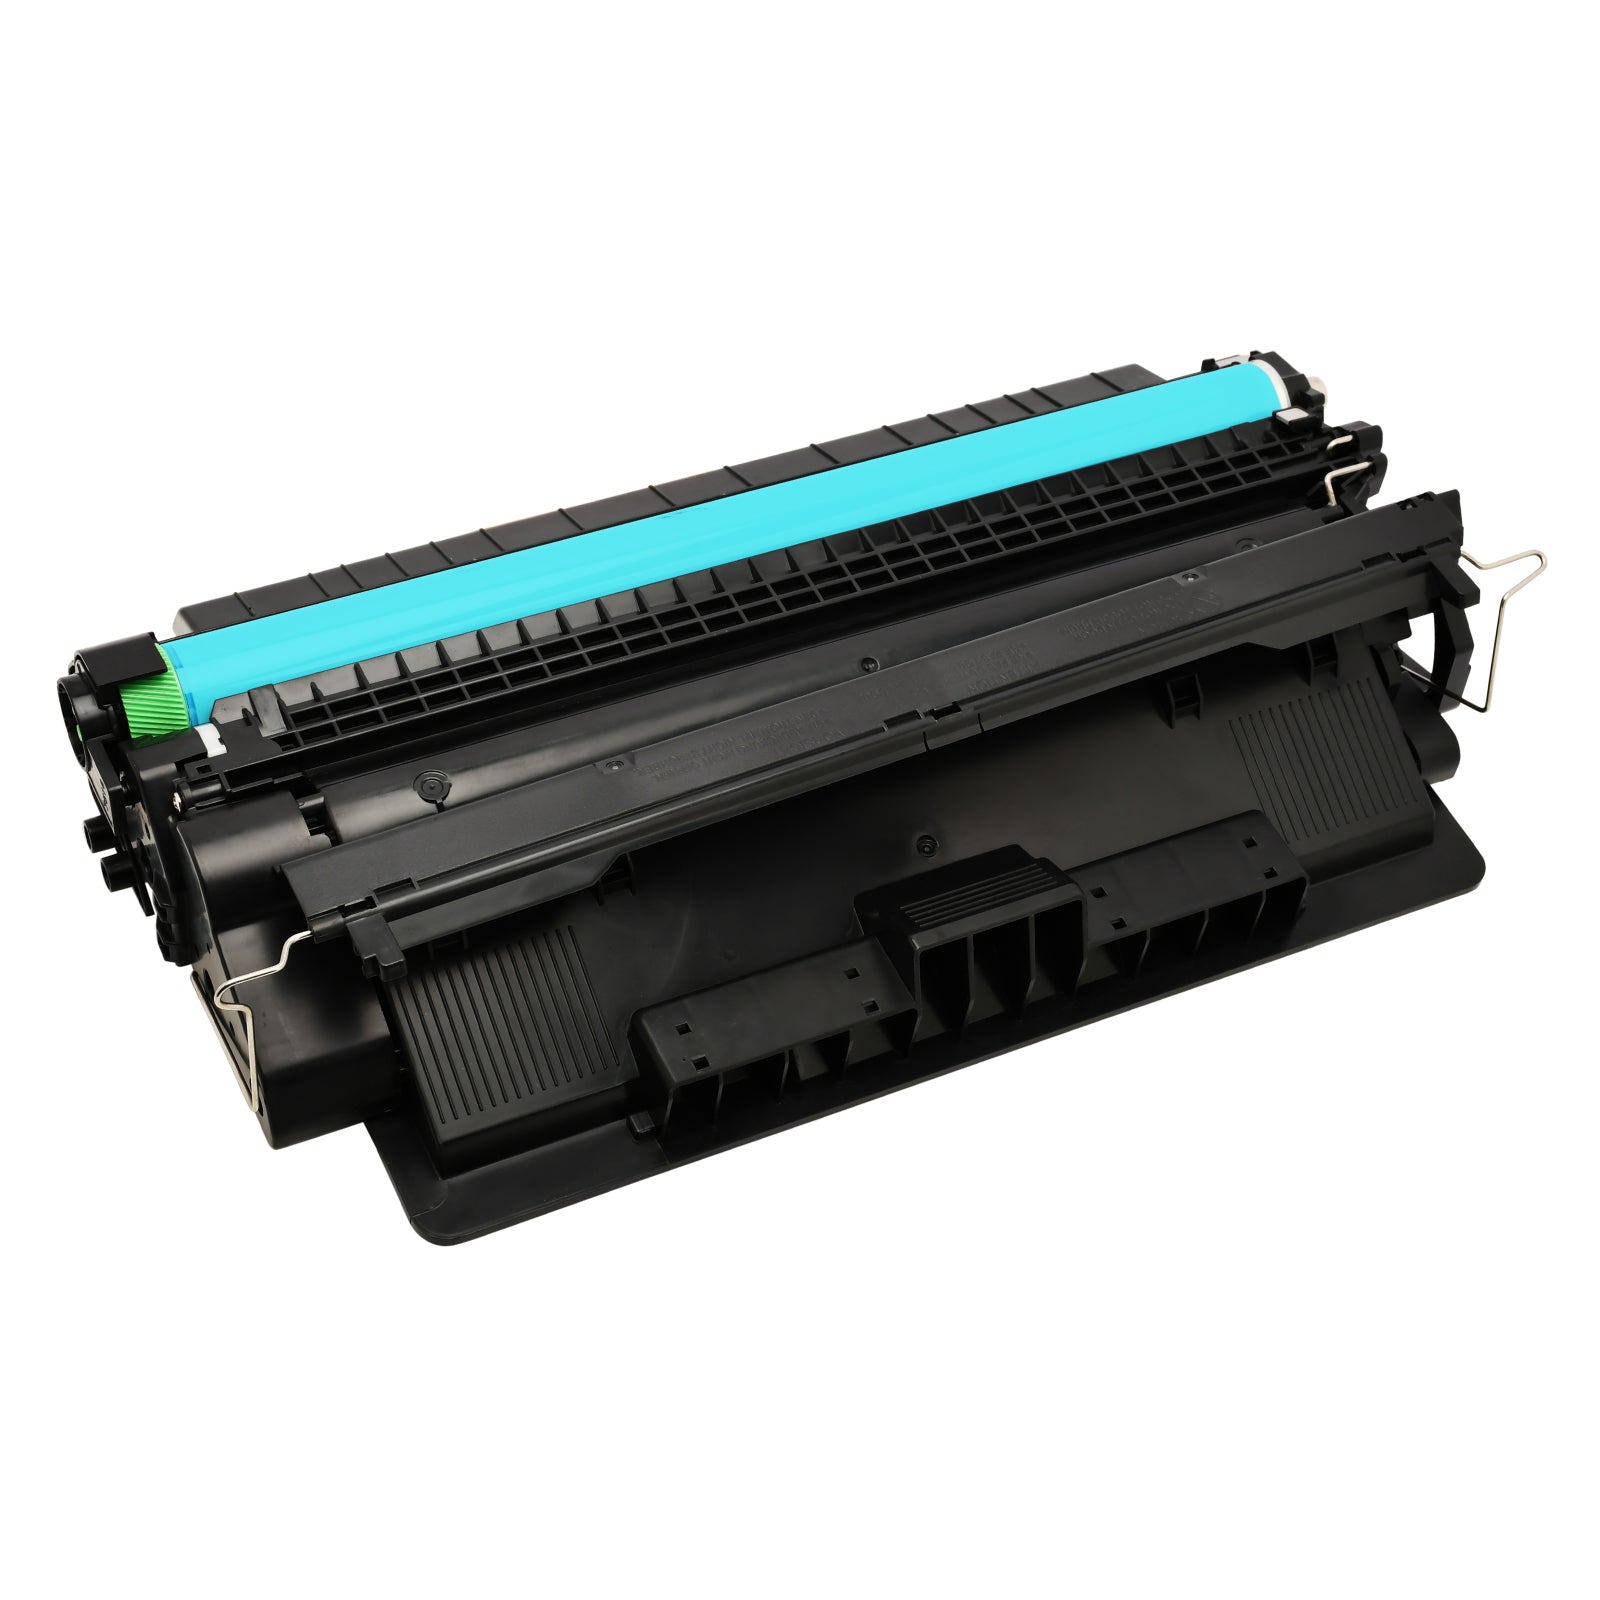 SKY 16A Toner Cartridge Q7516A for HP LaserJet 5200